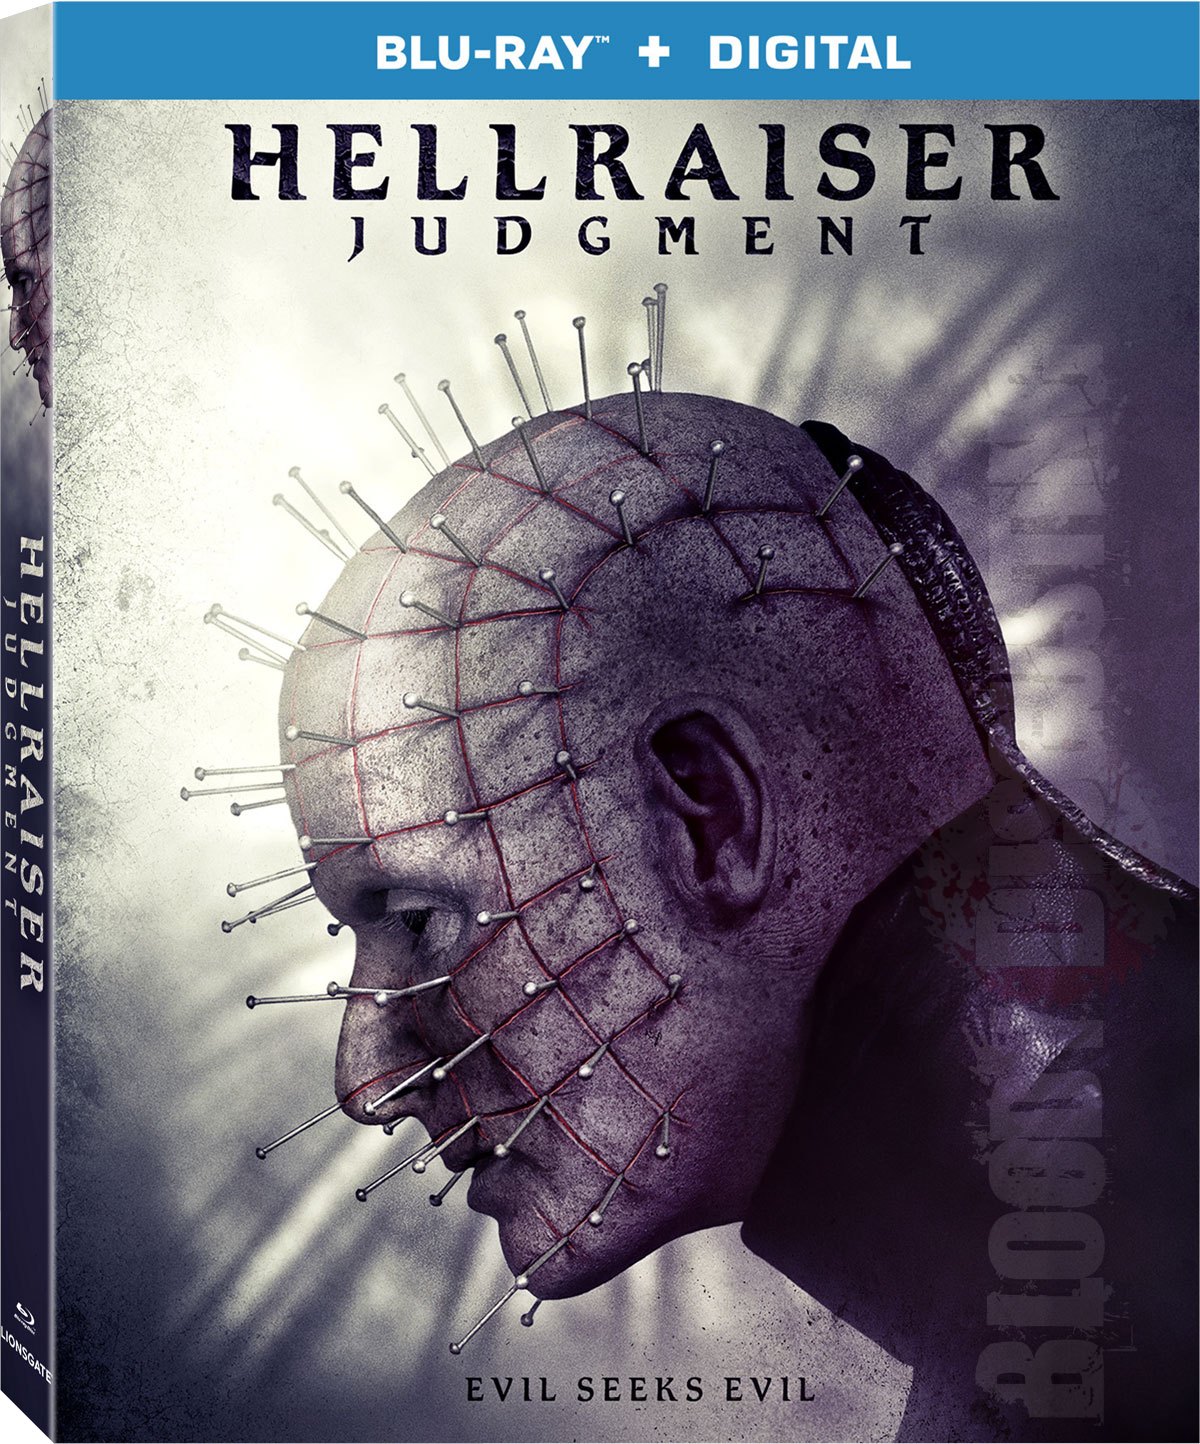 Hellraiser Judgment BD 3D watermarked